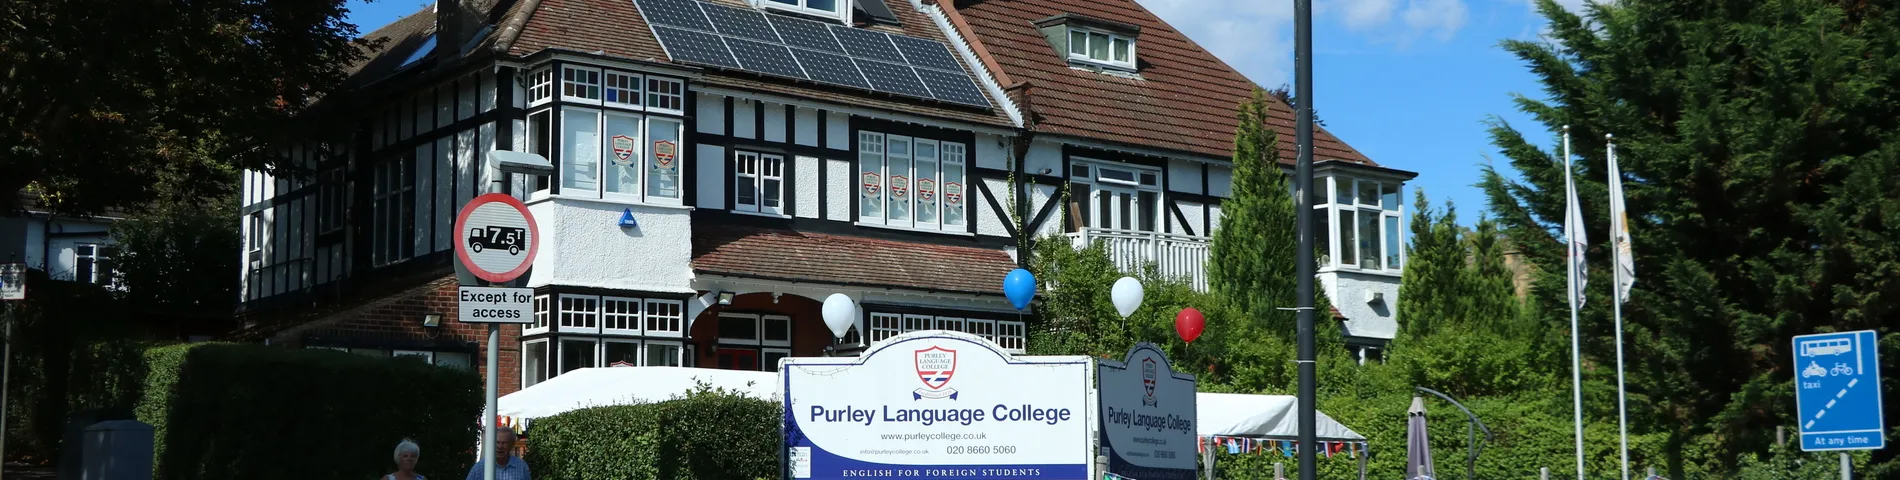 Purley Language College صورة 1